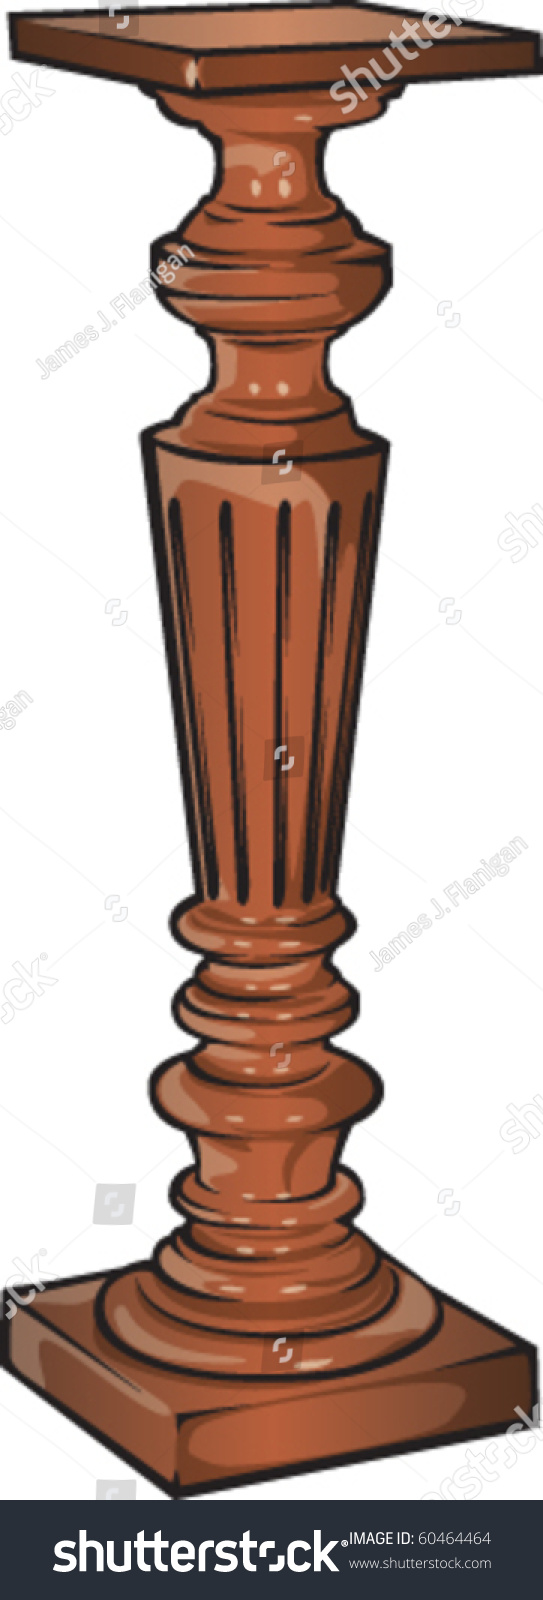 Cartoon Wooden Pedestal Table. Stock Vector Illustration 60464464 ...